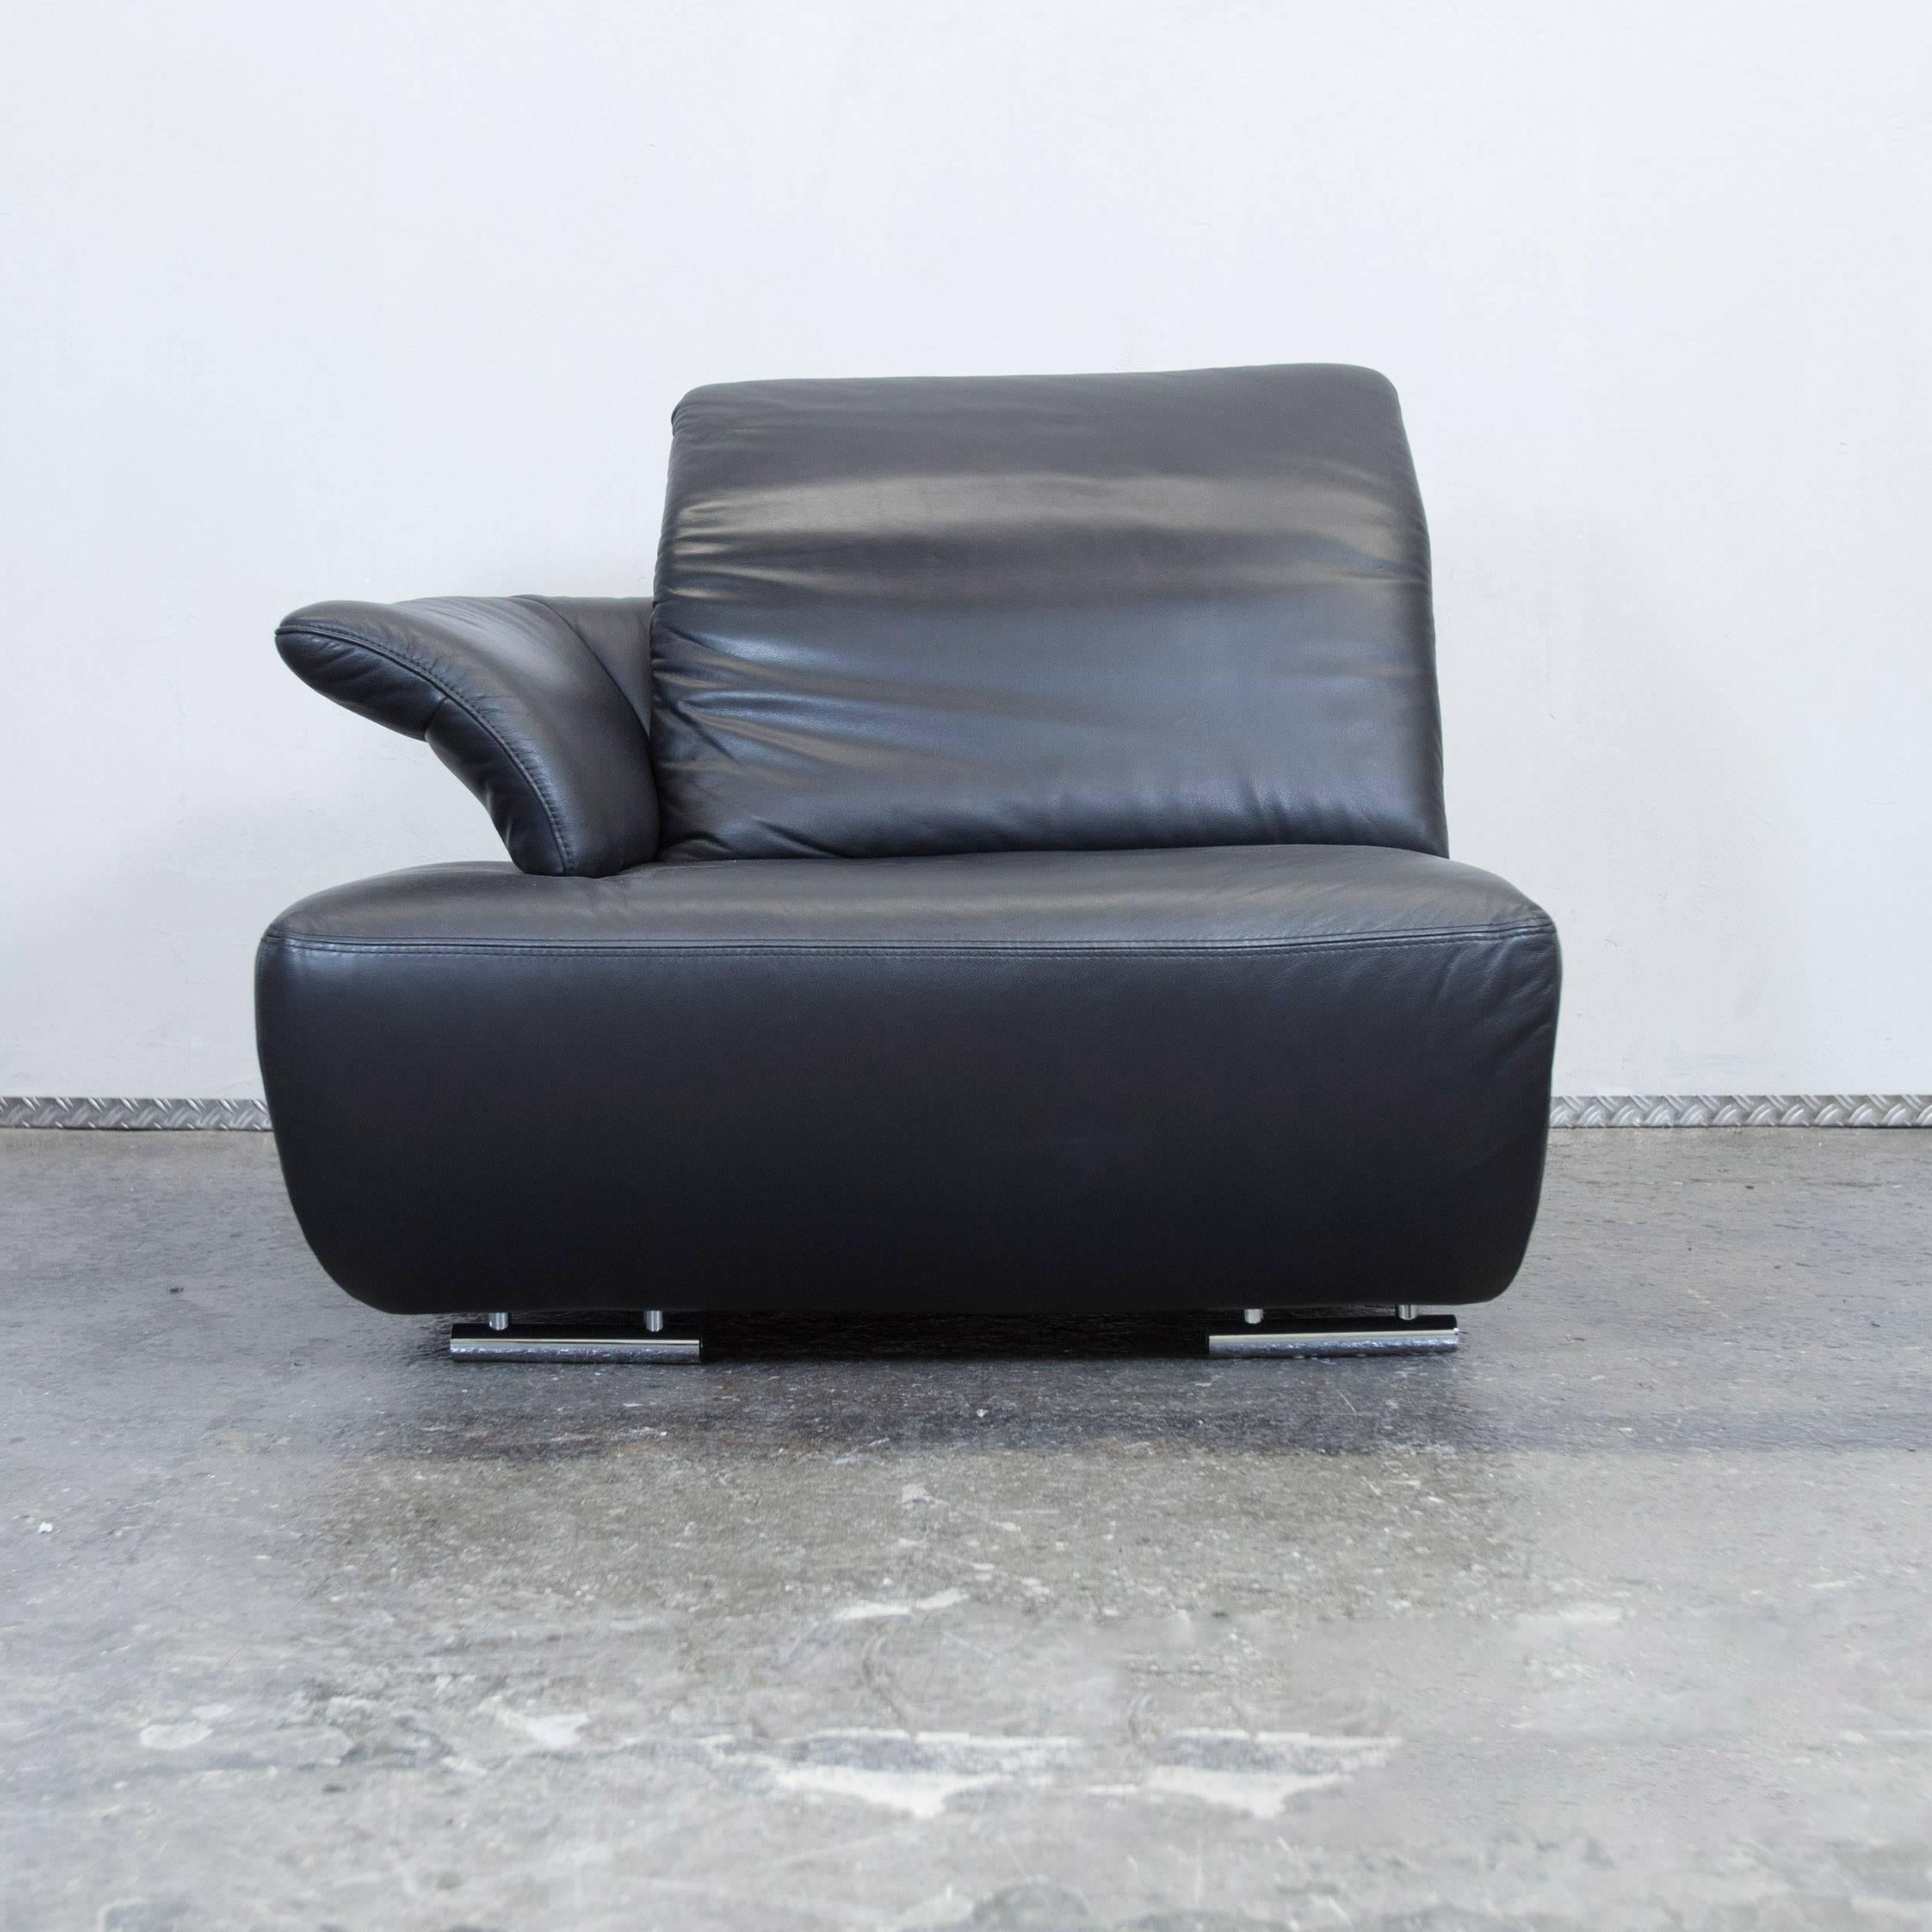 Black colored original Koinor Avanti designer leather chair in a minimalistic and modern design.